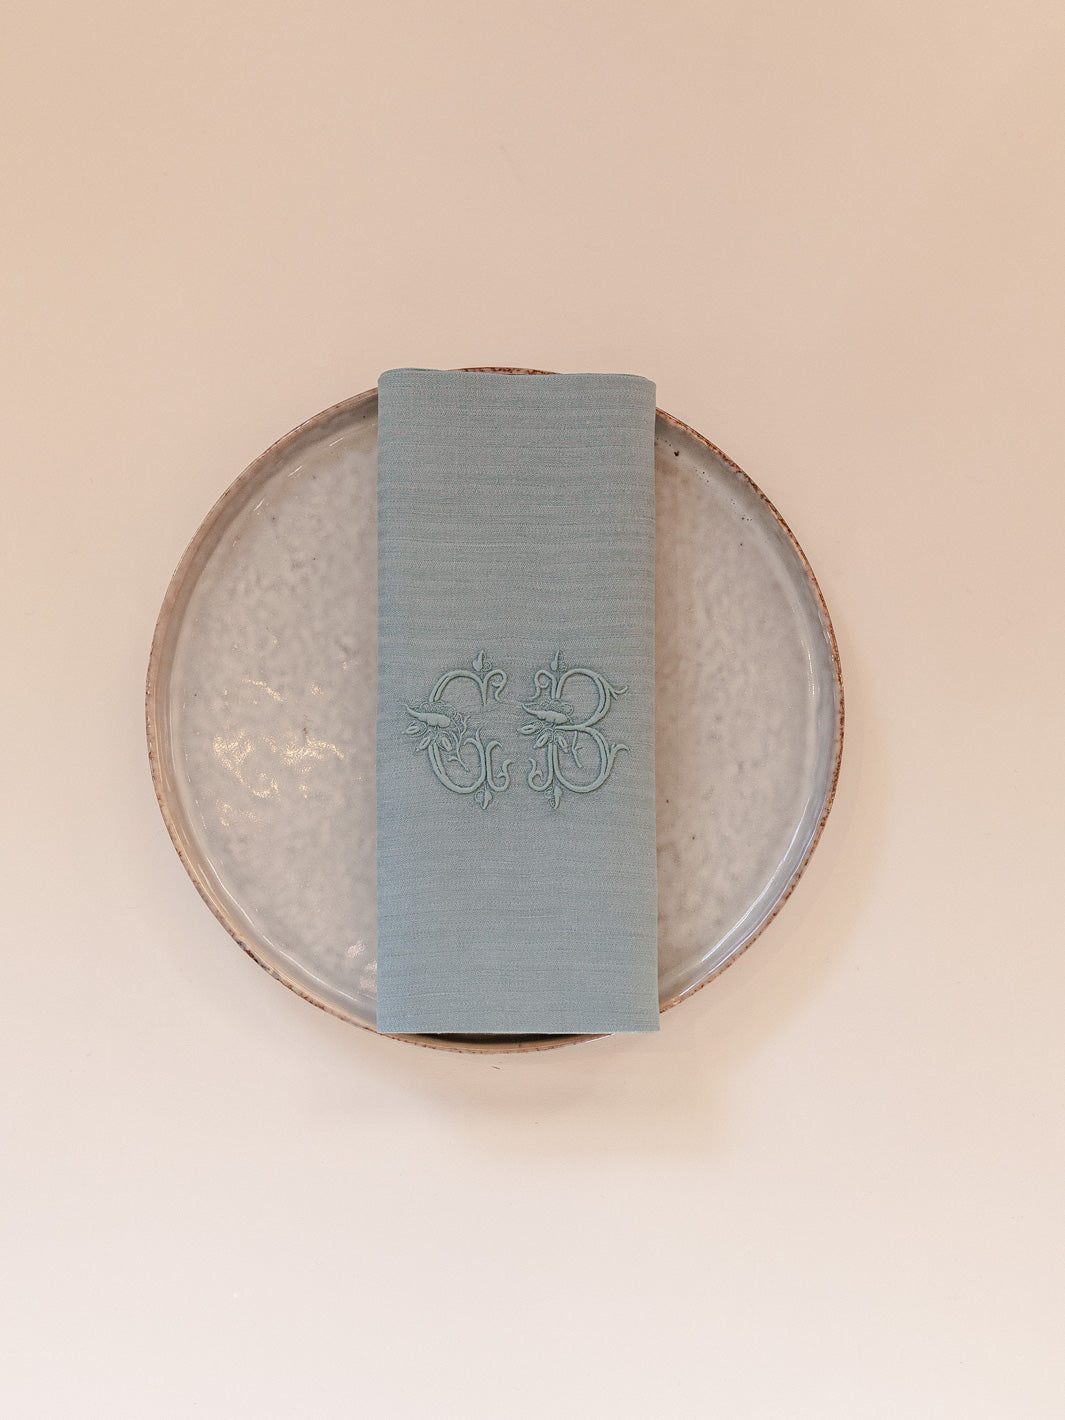 Set of 16 blue-gray "GB" damask napkins